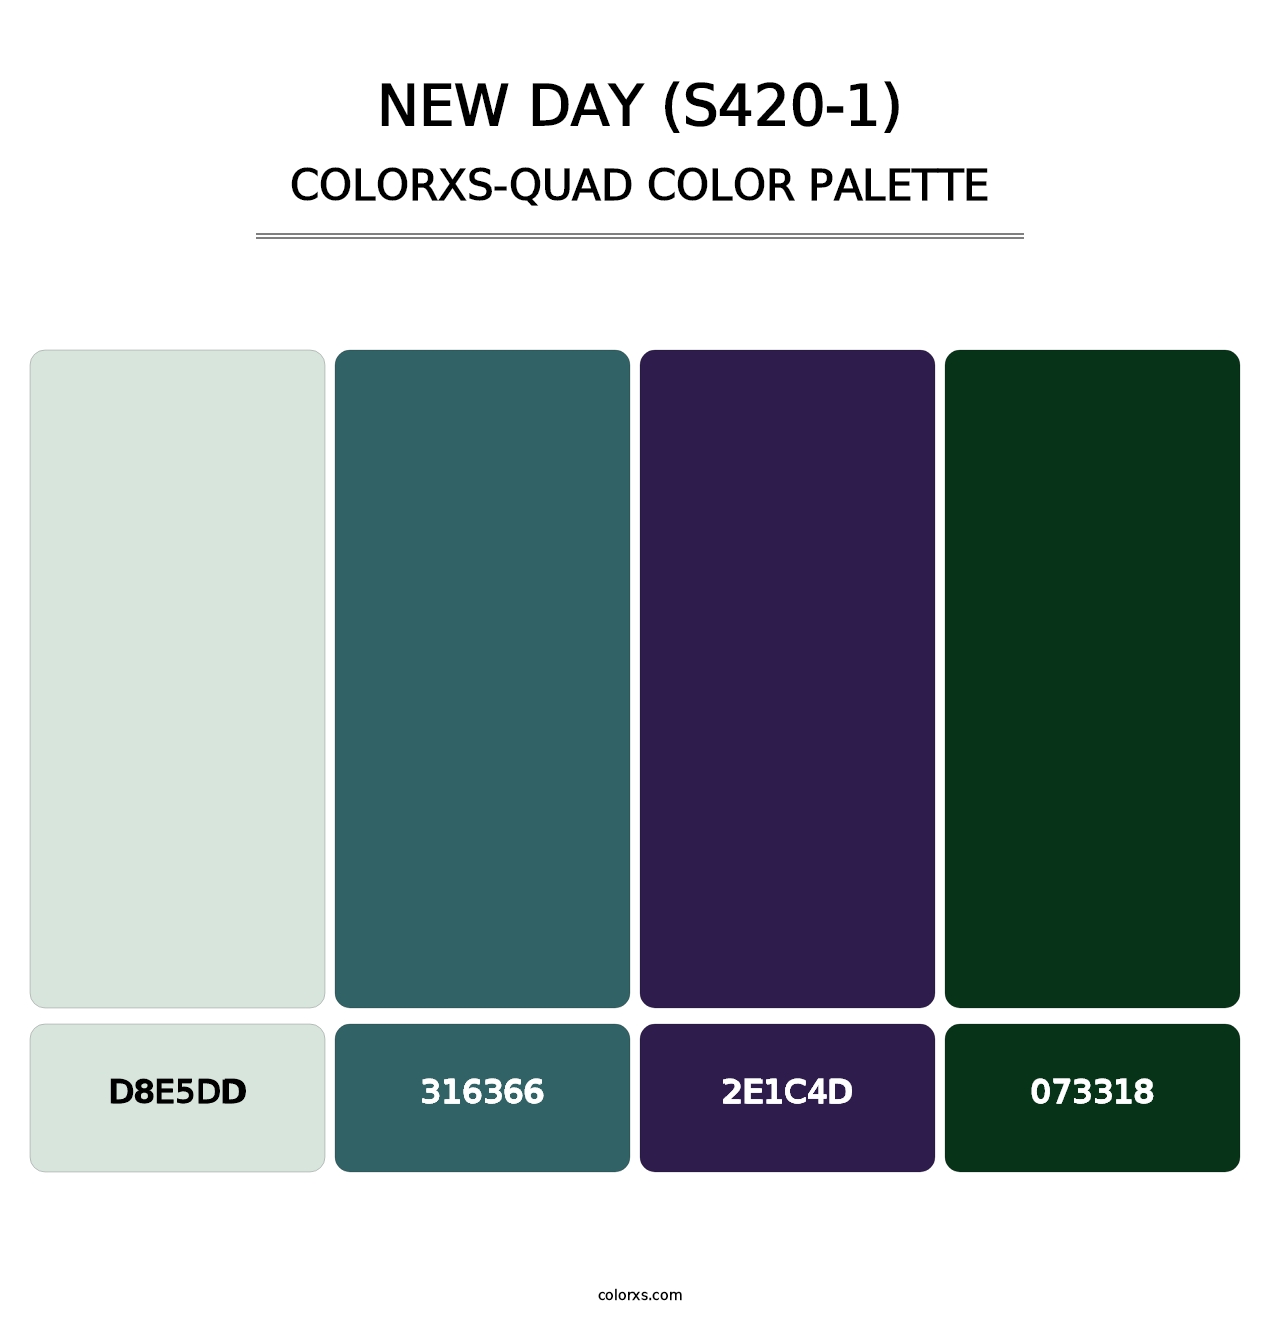 New Day (S420-1) - Colorxs Quad Palette